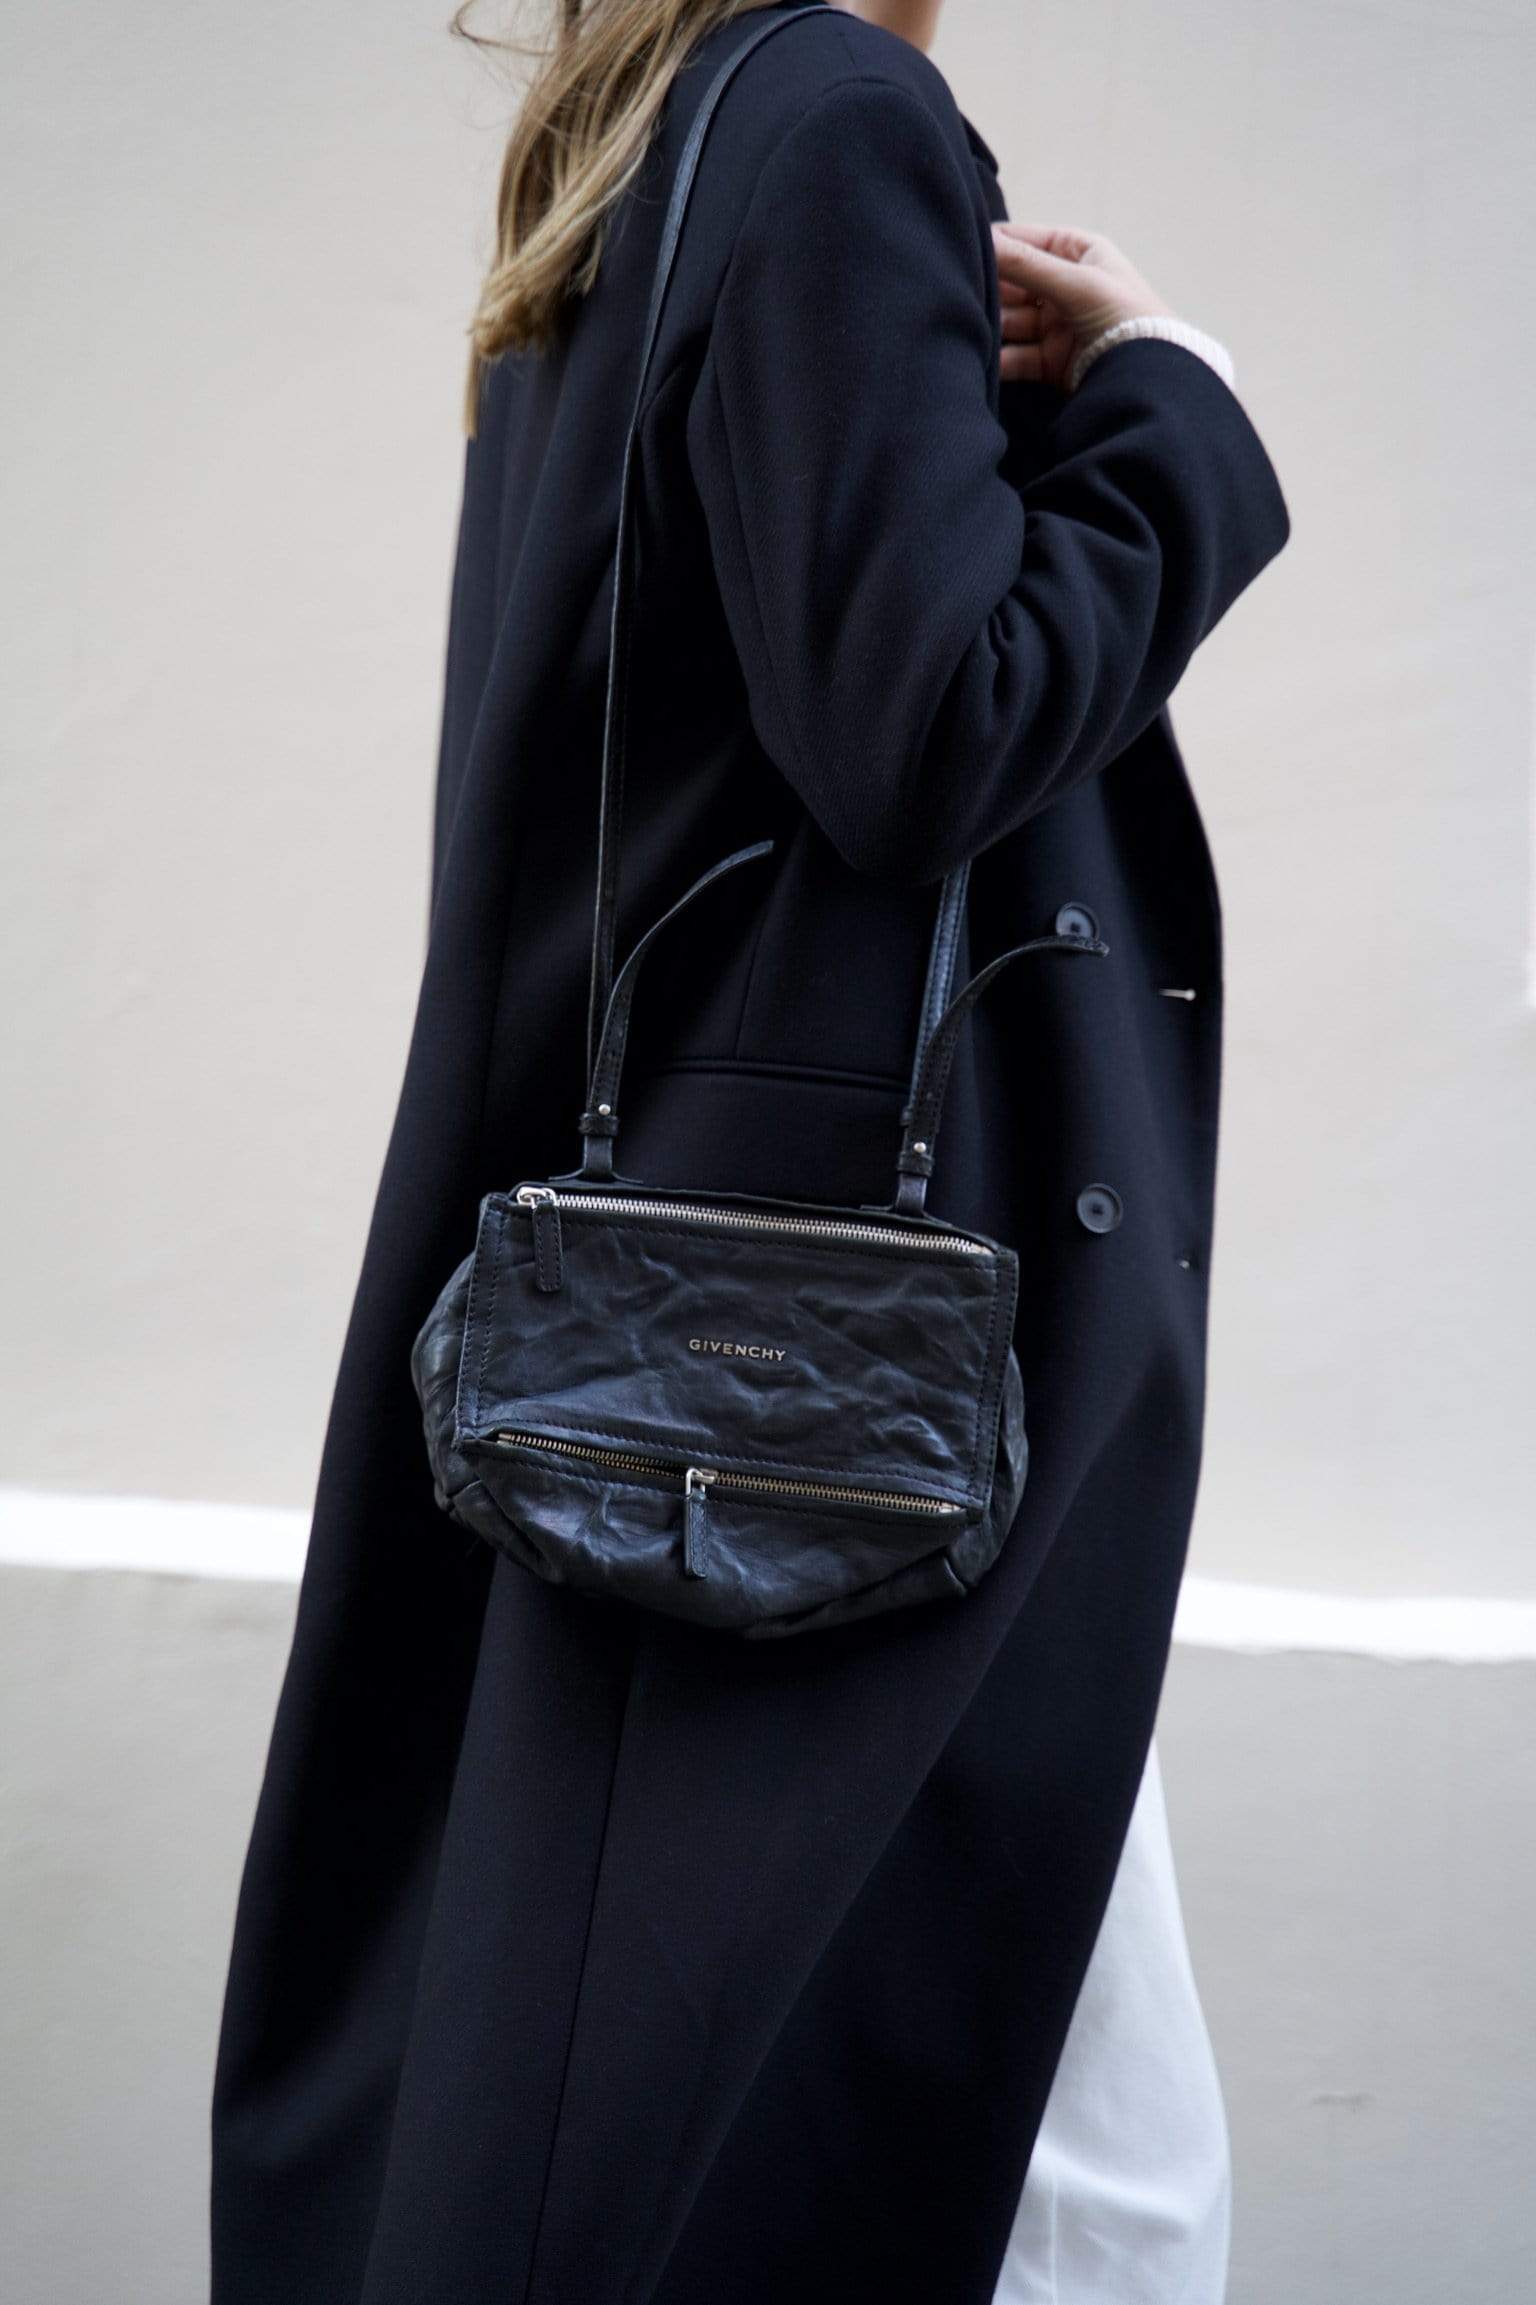 Givenchy Givenchy pandora Bag - ADL1502